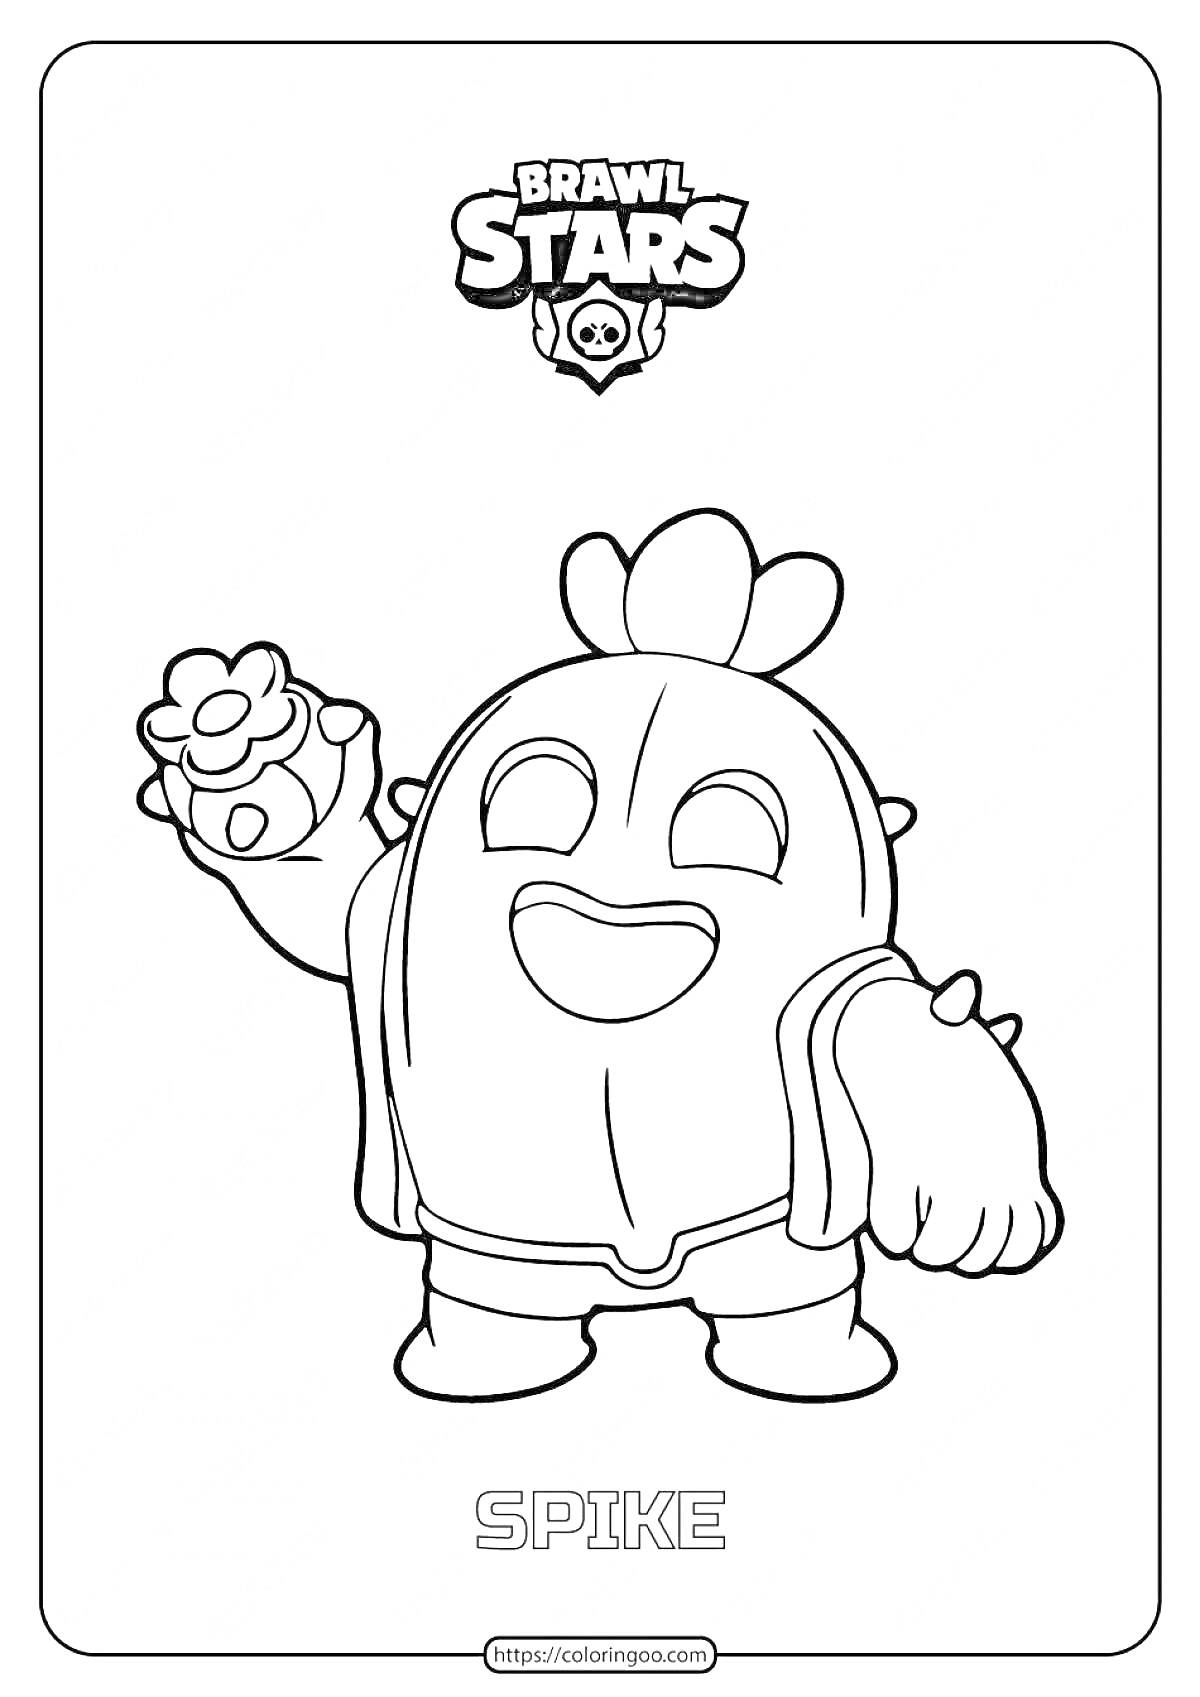 Раскраска Раскраска из игры Brawl Stars с персонажем Спайк, держащим цветок